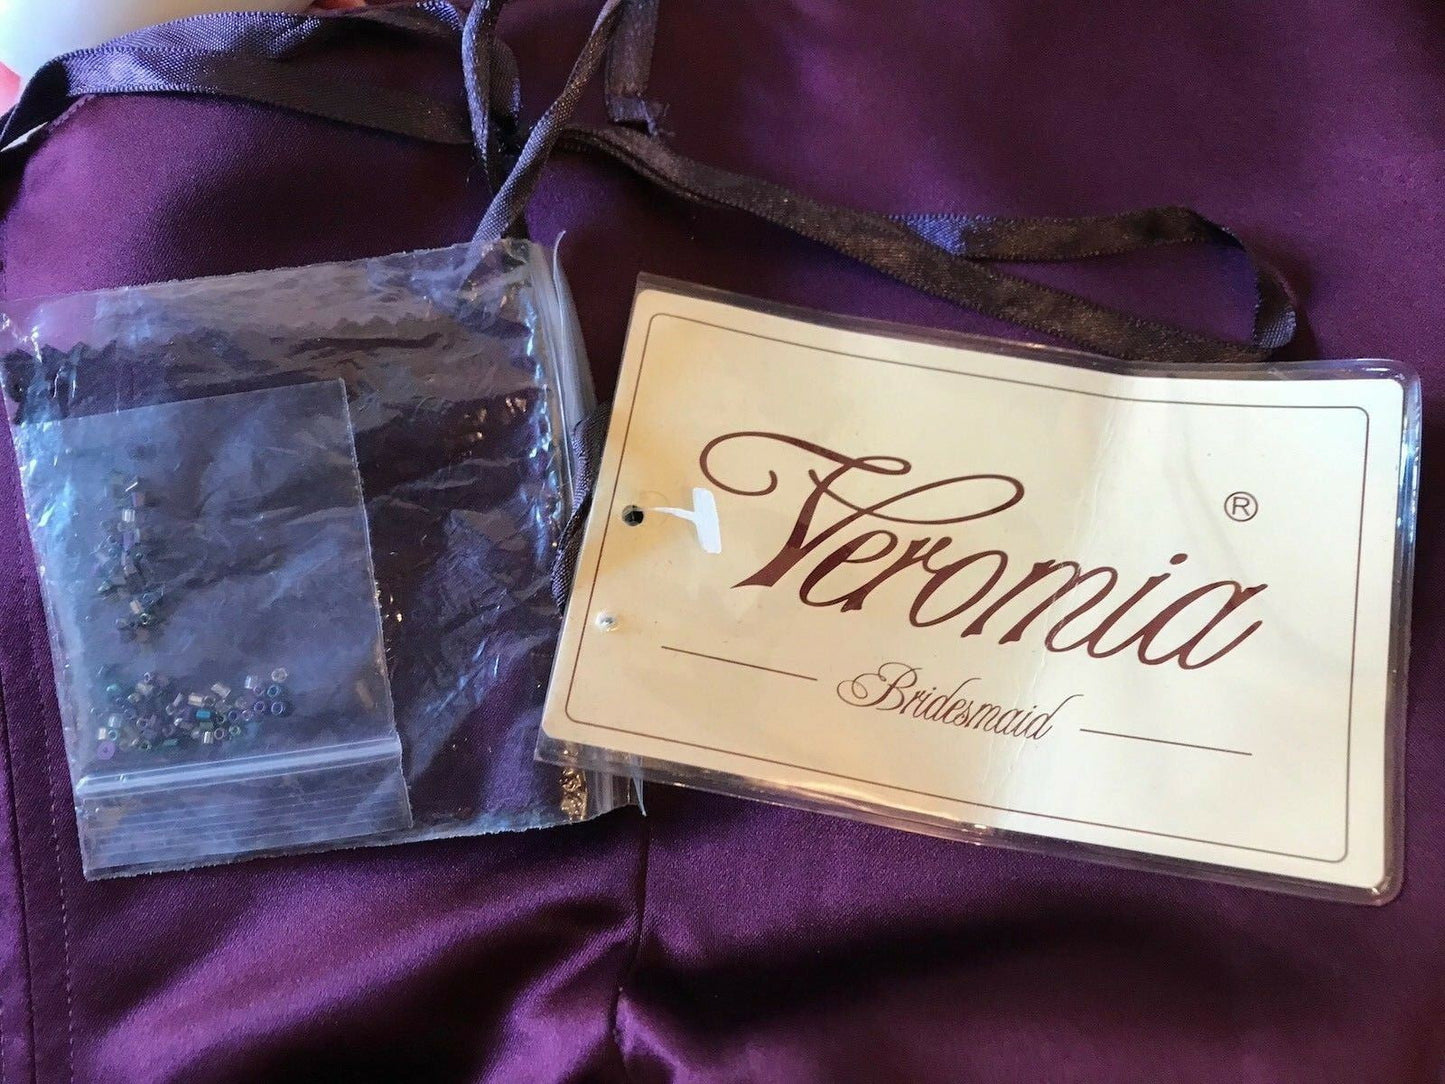 Veromia Womens Burgundy Satin Skirt & Bodice UK 10/12 Timeless Fashions